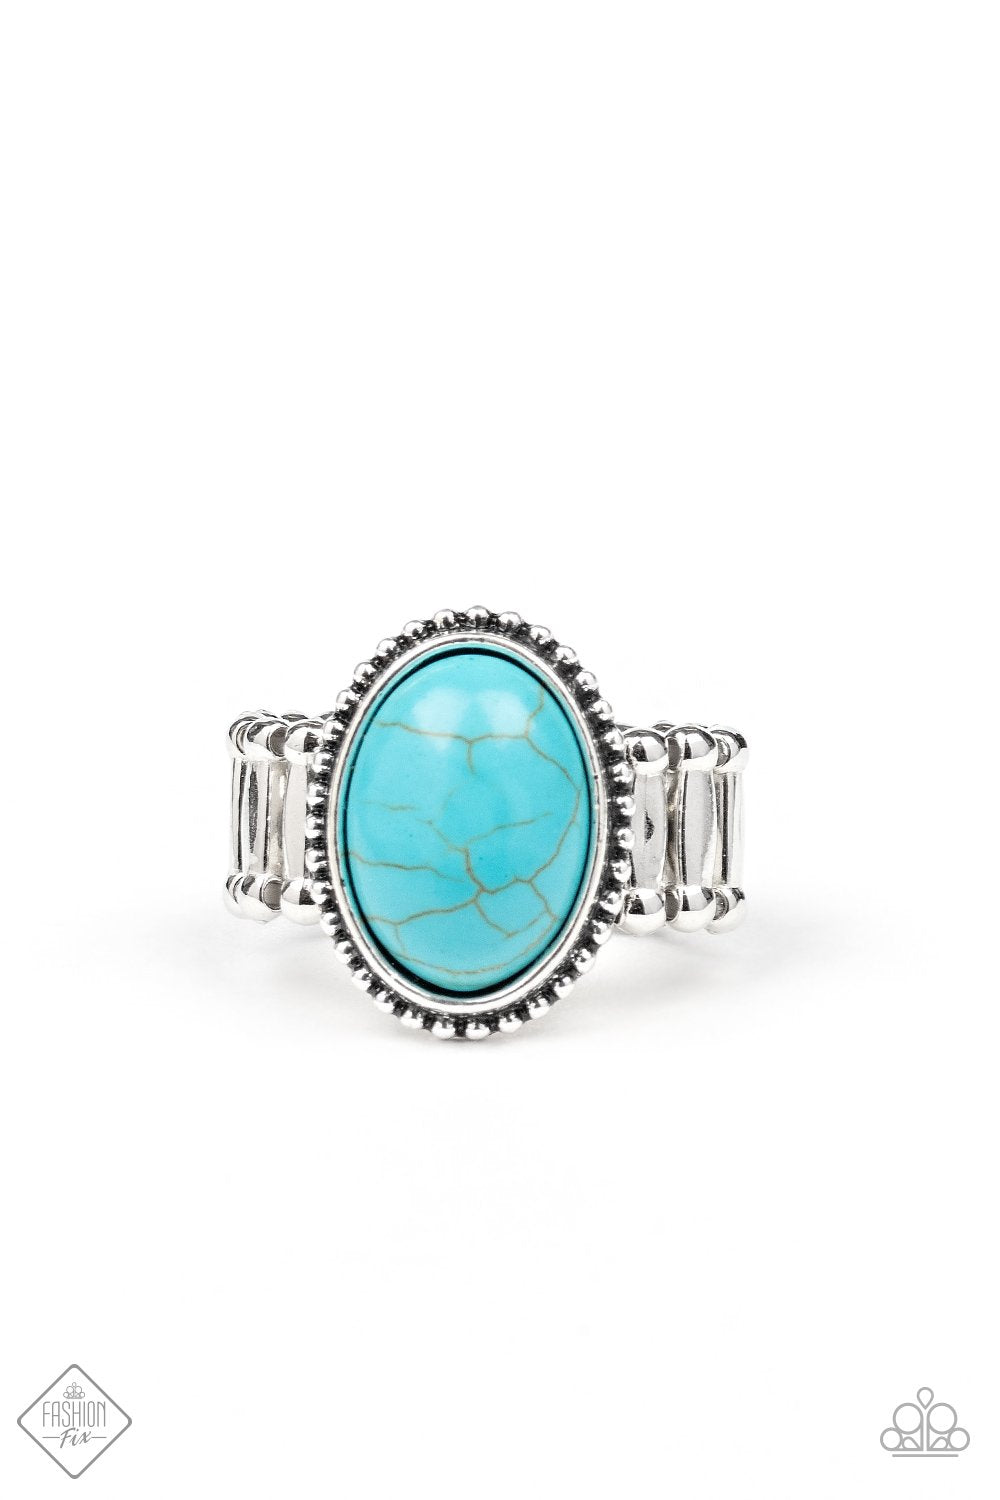 Paparazzi Bountiful Deserts Blue Stone Ring - Fashion Fix Simply Santa Fe March 2020